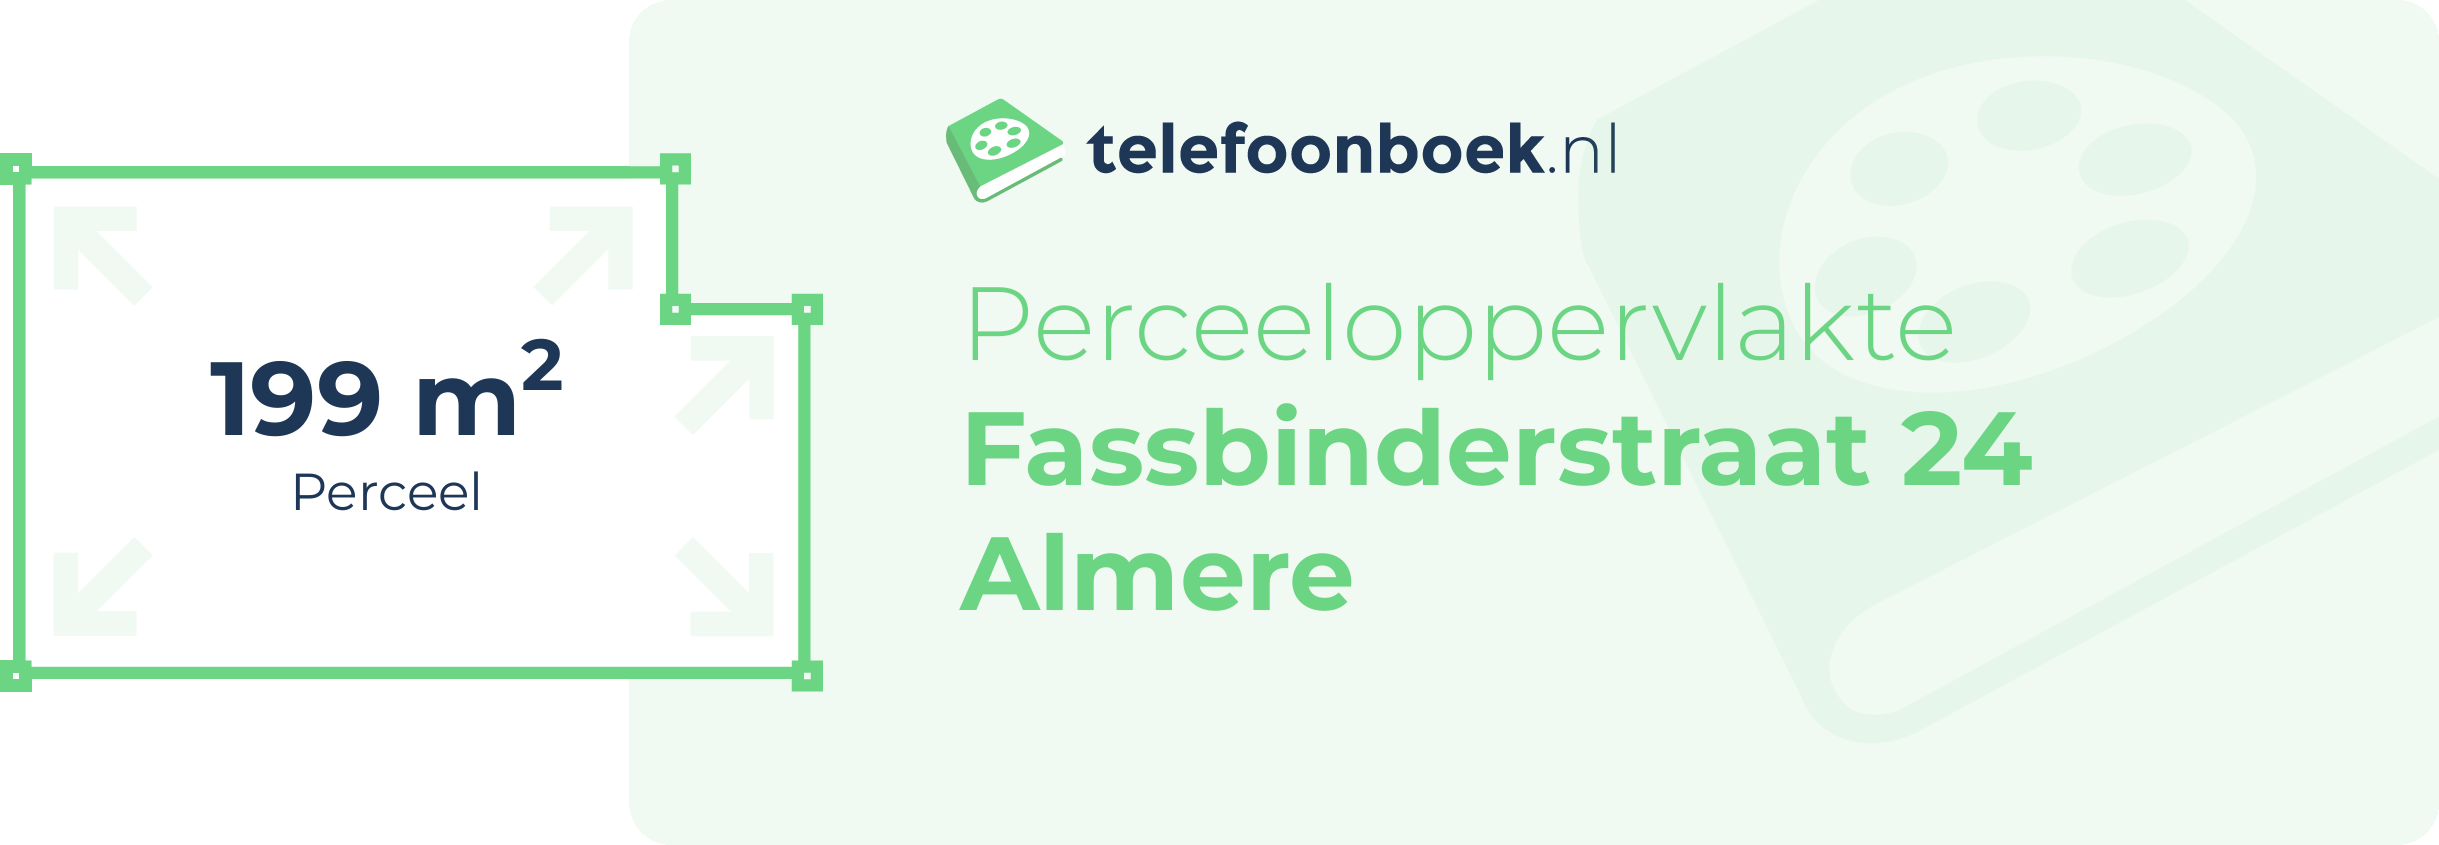 Perceeloppervlakte Fassbinderstraat 24 Almere